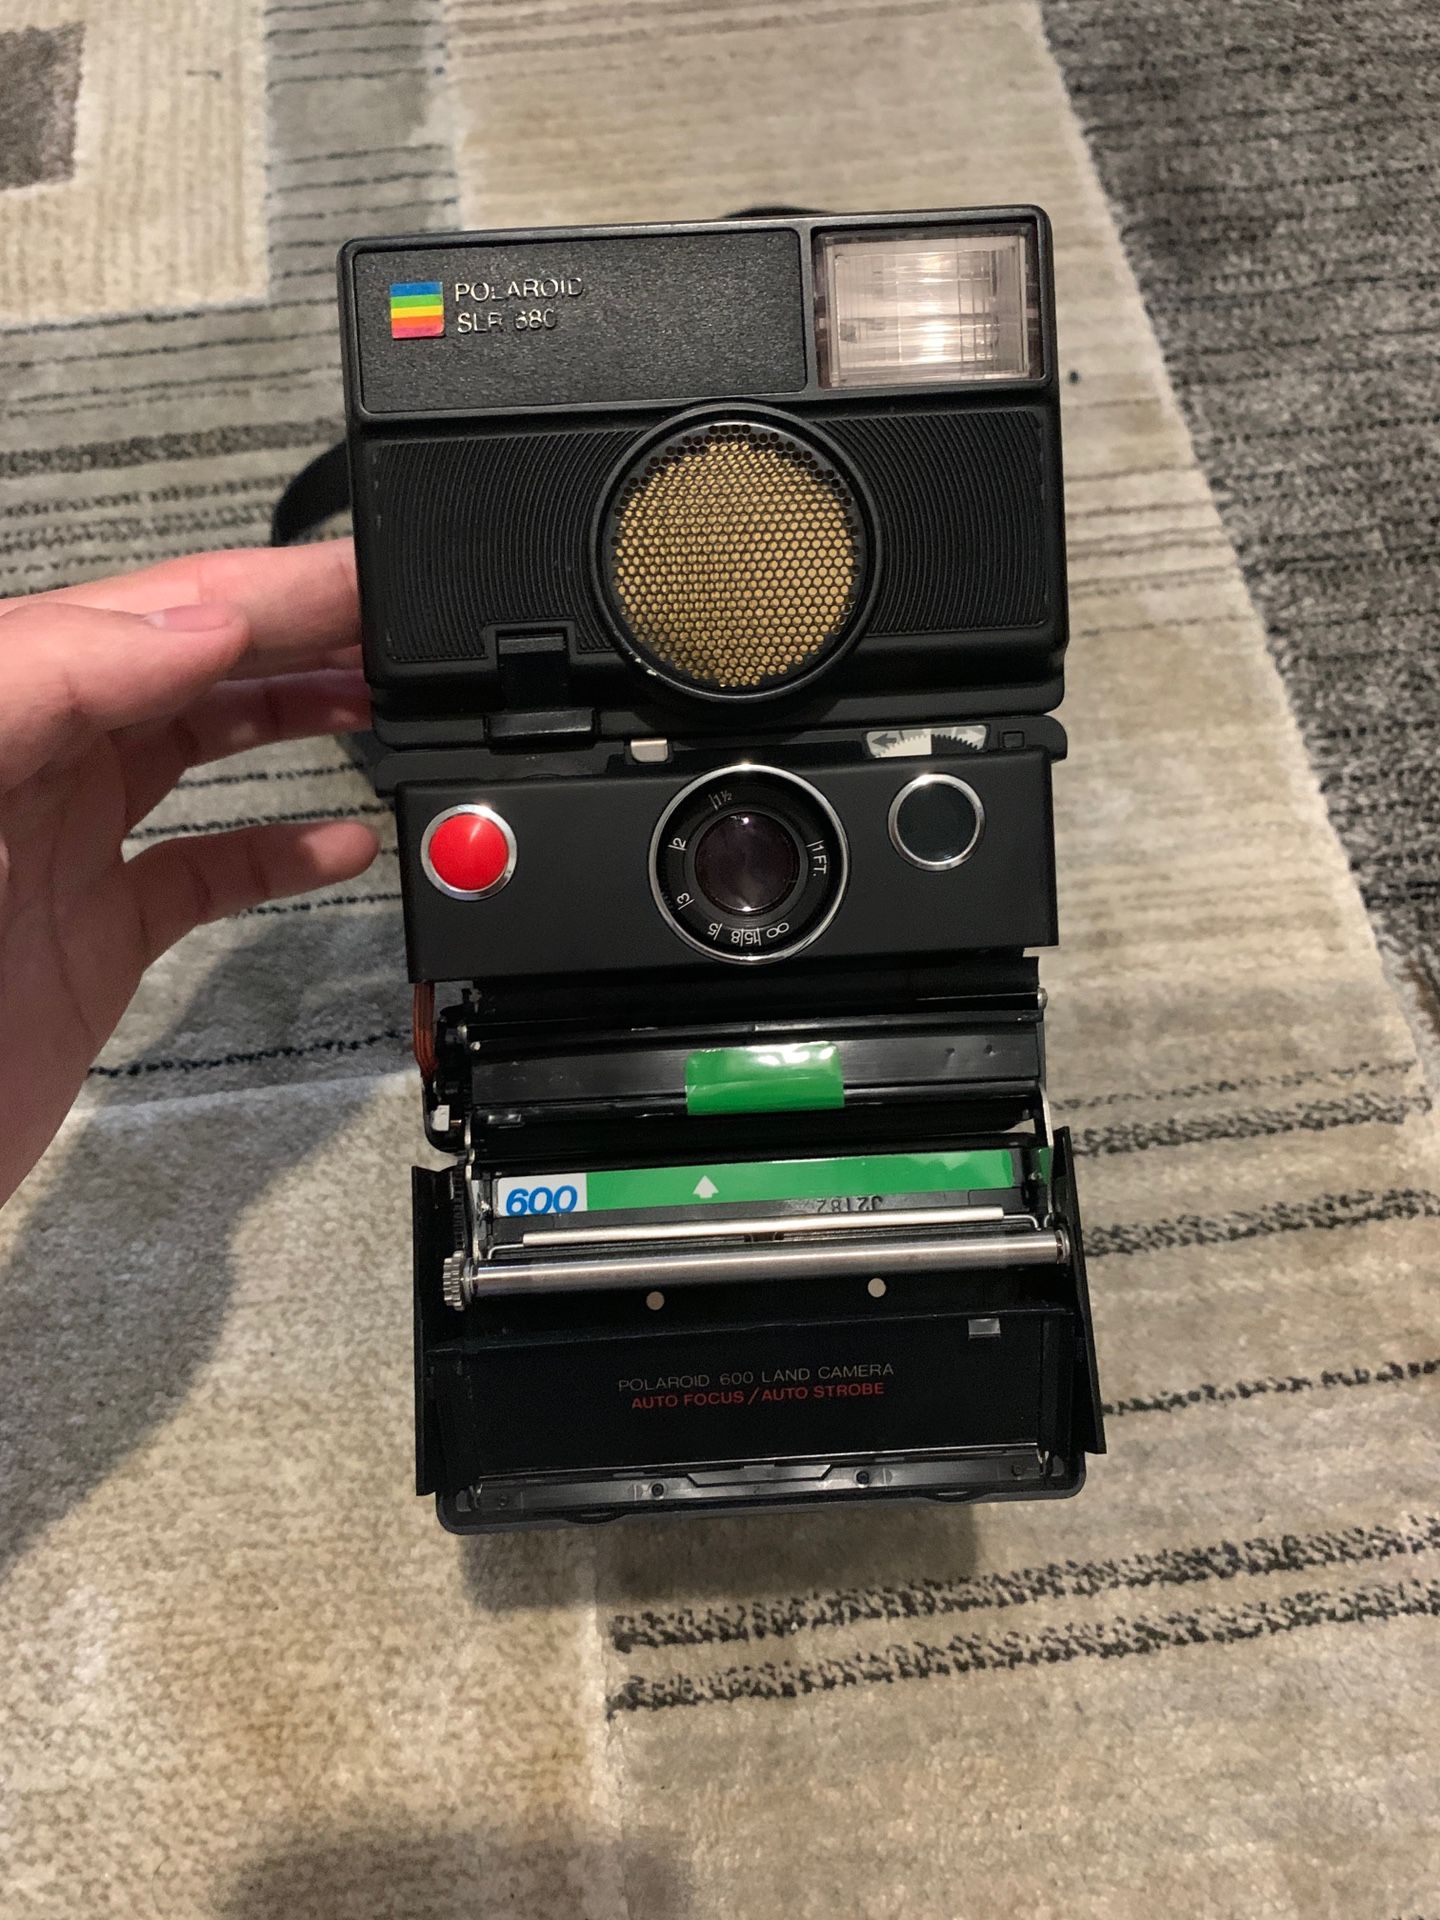 Polaroid SLR 680 (TESTED)- Instant Film Camera - Sonar Auto Focus - Flash - Vintage 80s